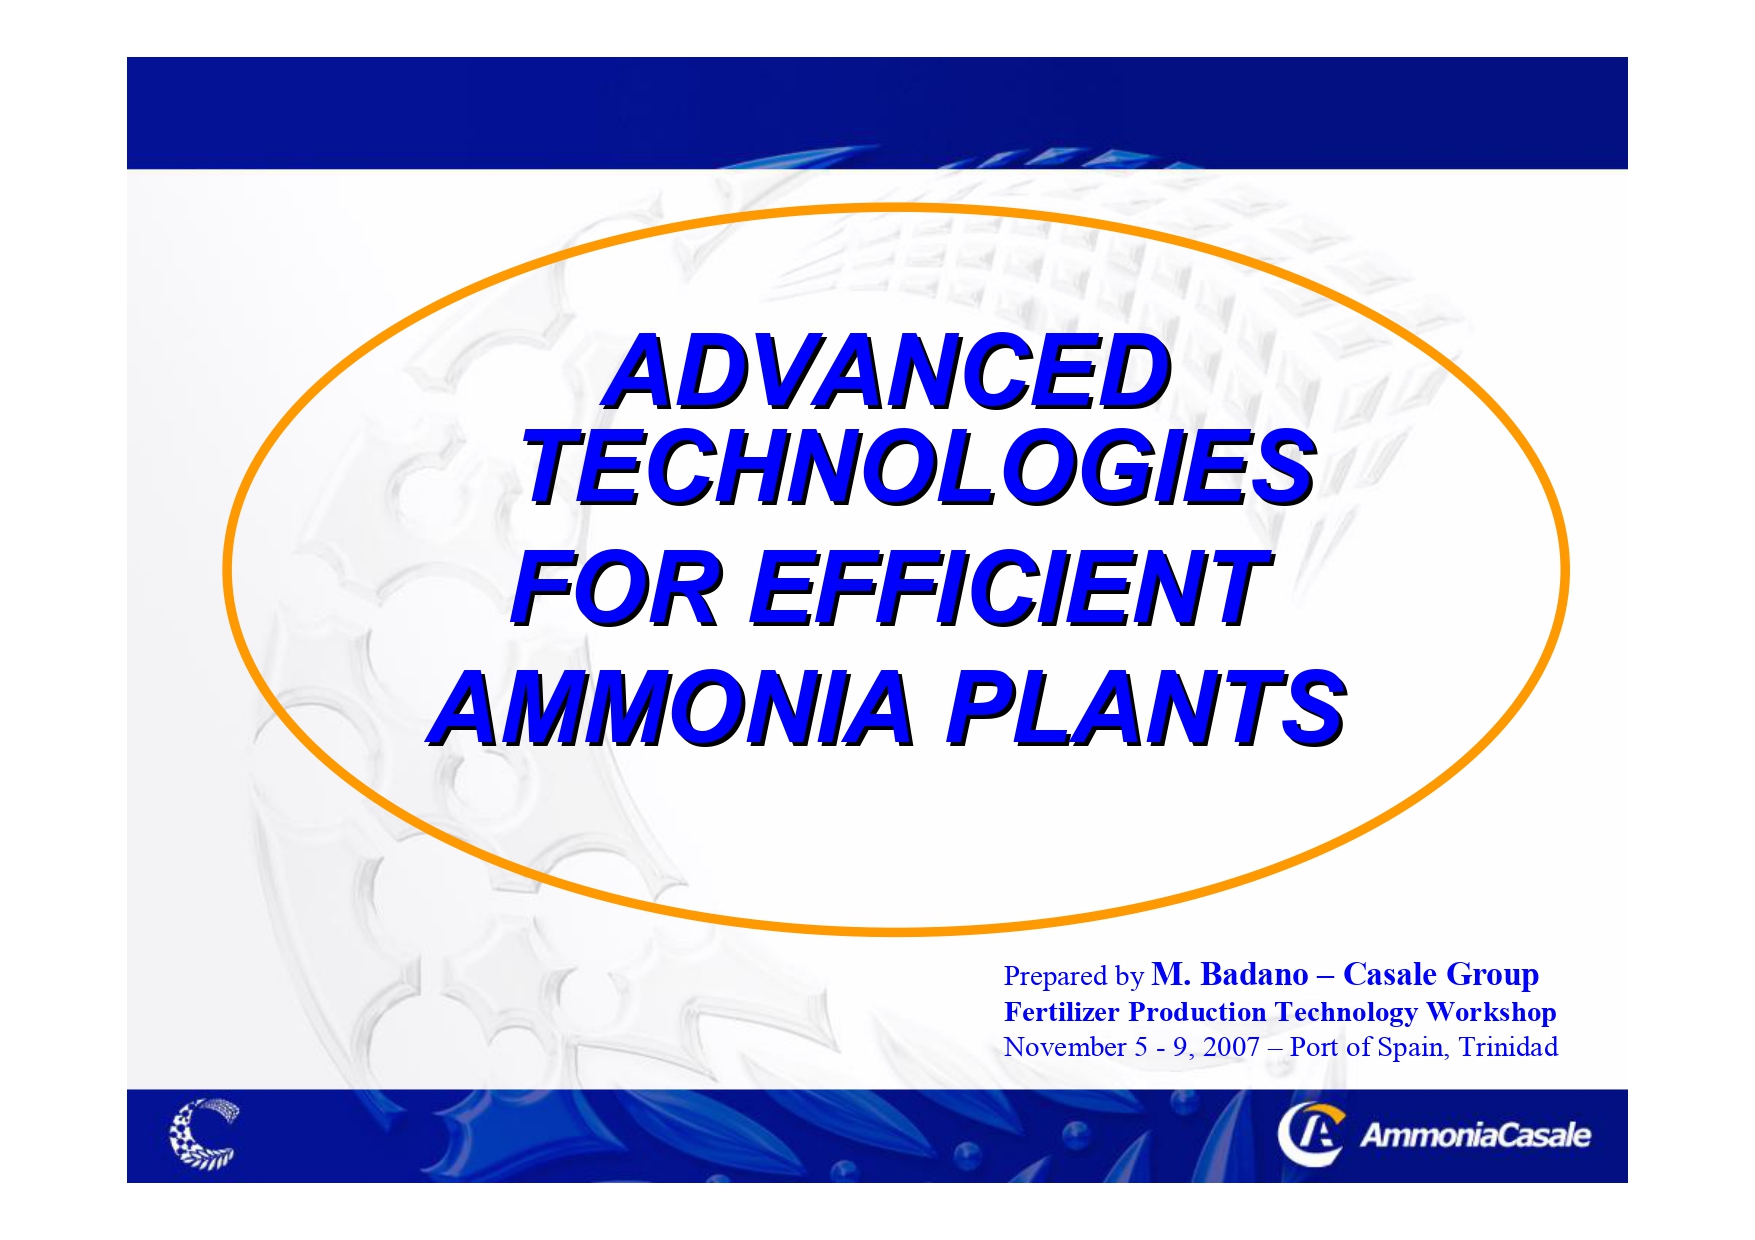 Advanced Technologies for Efficient Ammonia Plants